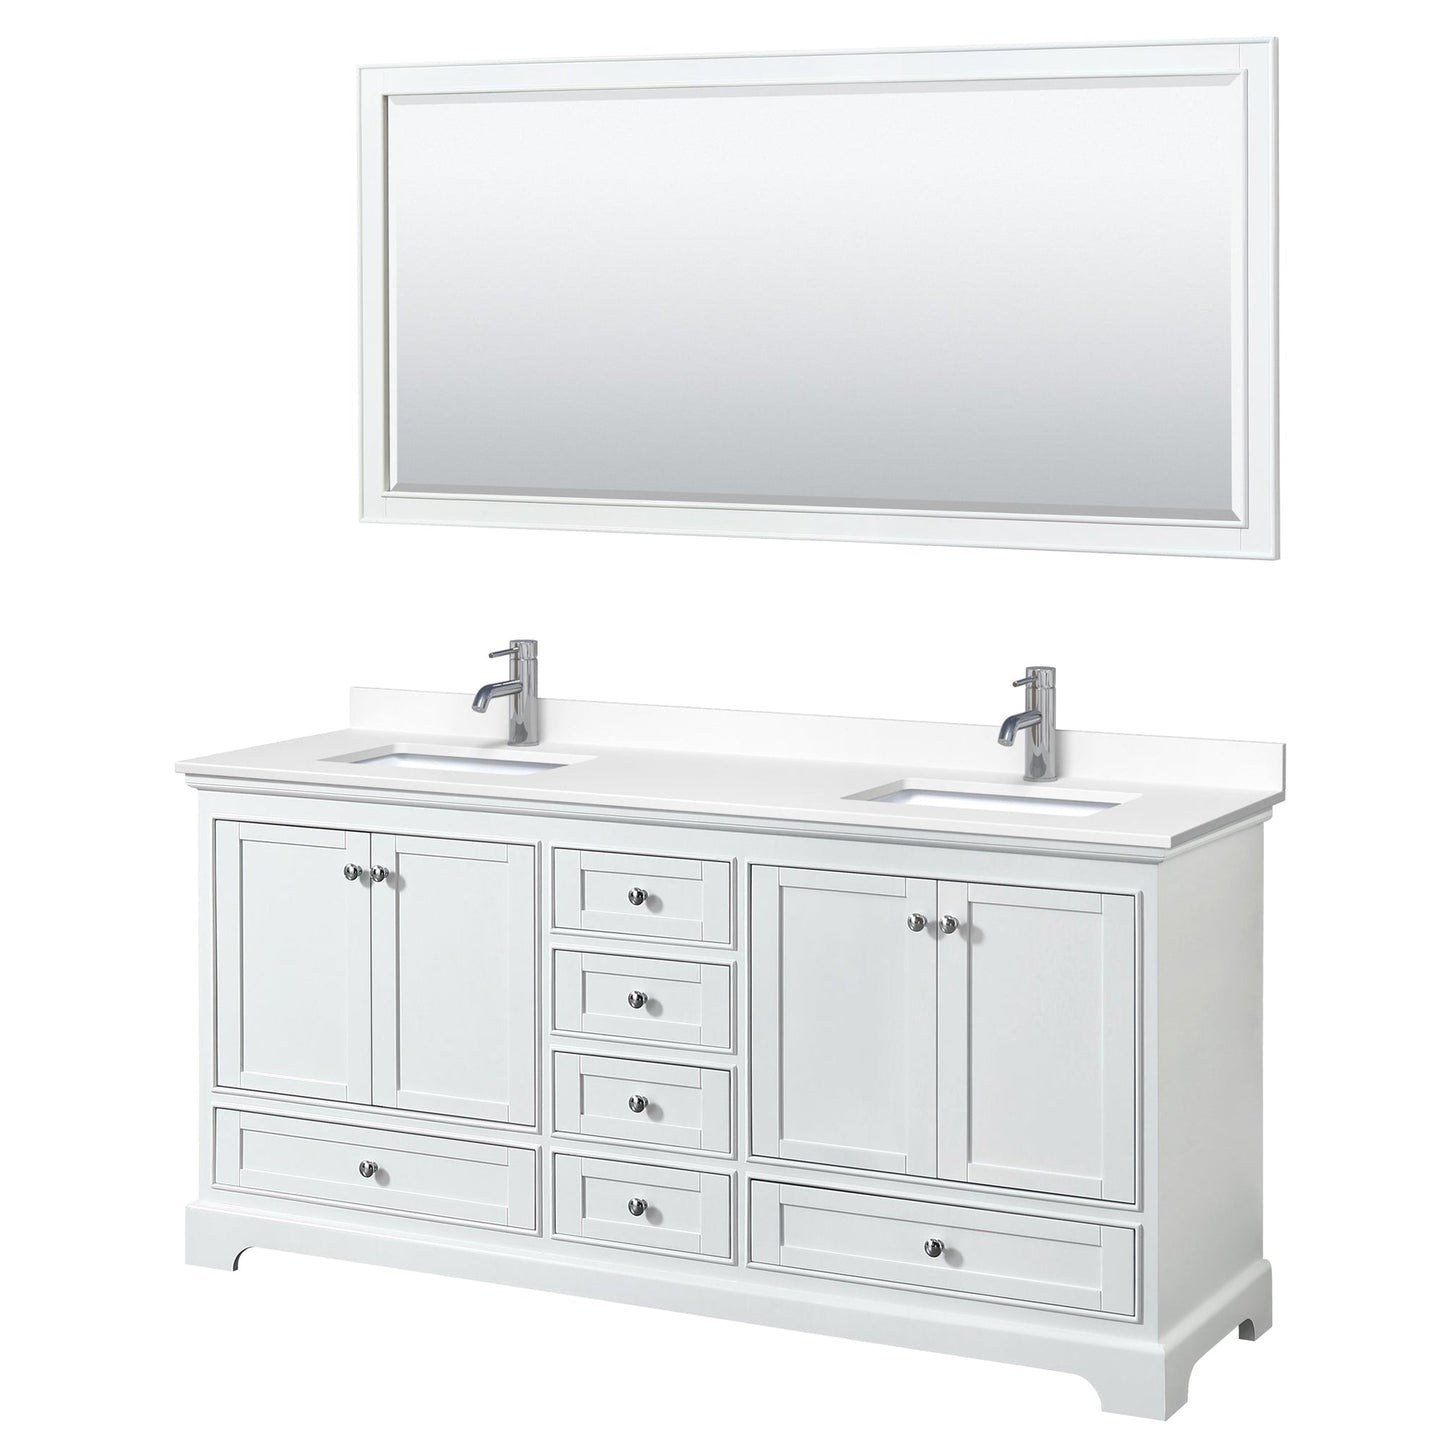 Wyndham Collection Deborah 72" Double Bathroom Vanity in White, White Cultured Marble Countertop, Undermount Square Sinks, 70" Mirror